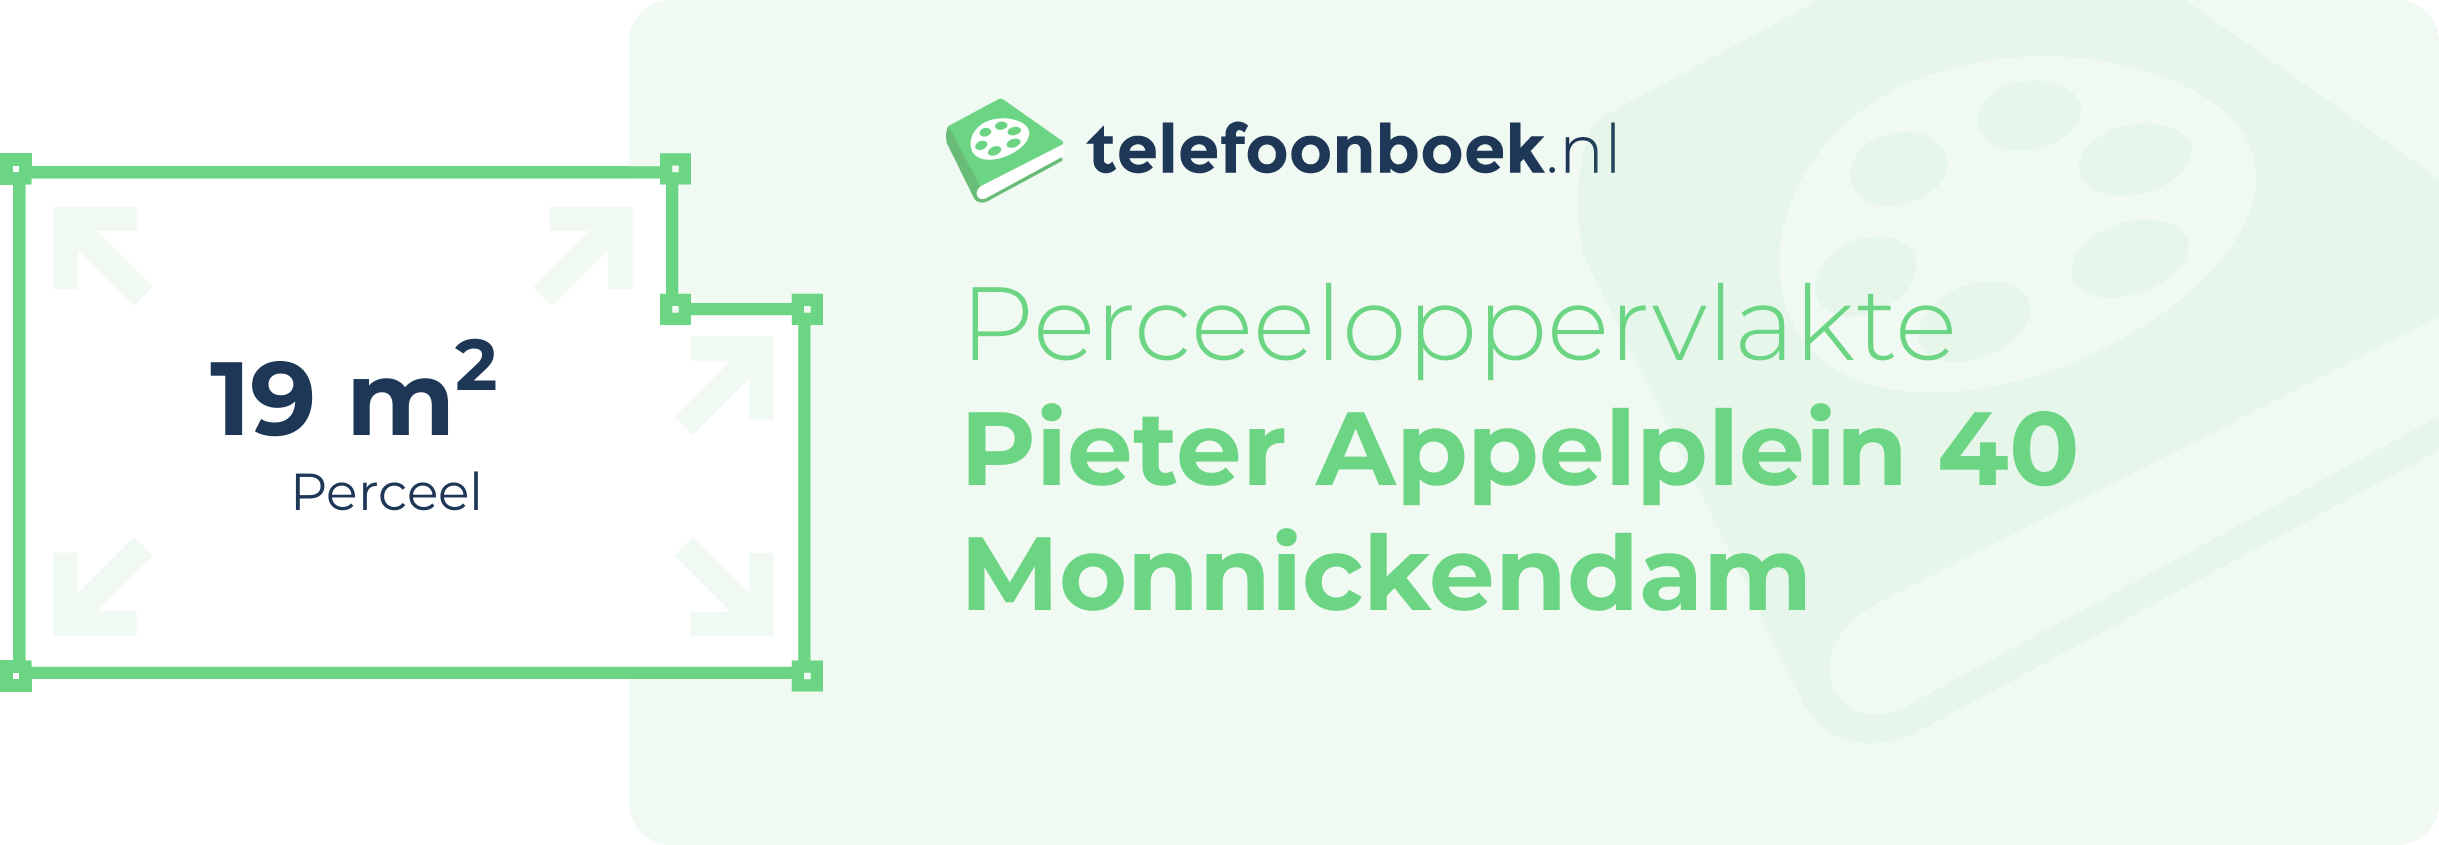 Perceeloppervlakte Pieter Appelplein 40 Monnickendam